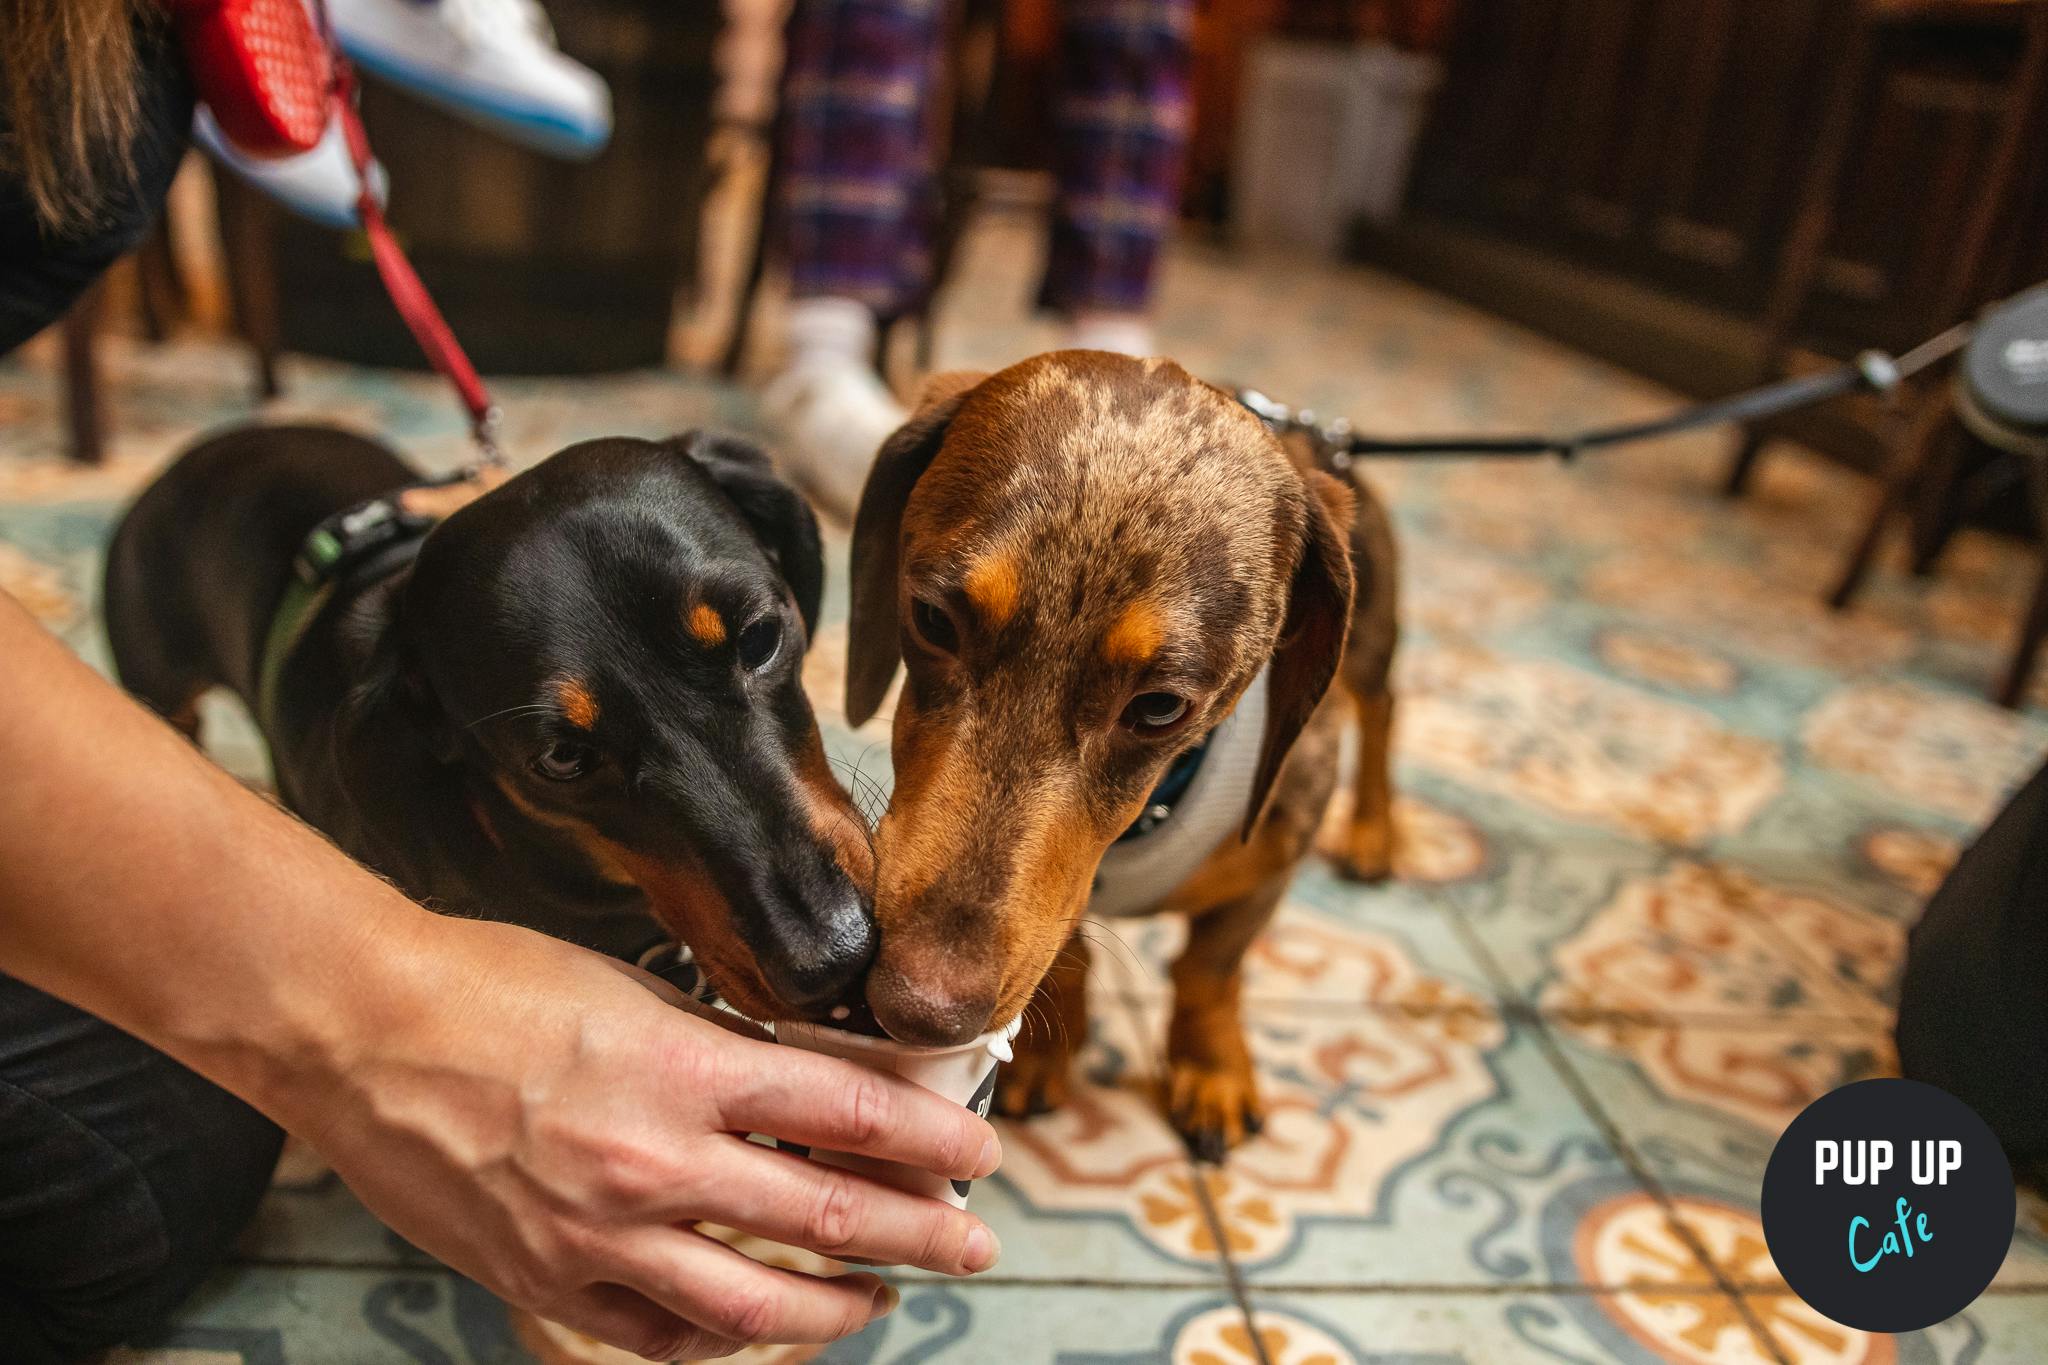 Edinburgh to host Dachshund Pup Up Cafe!